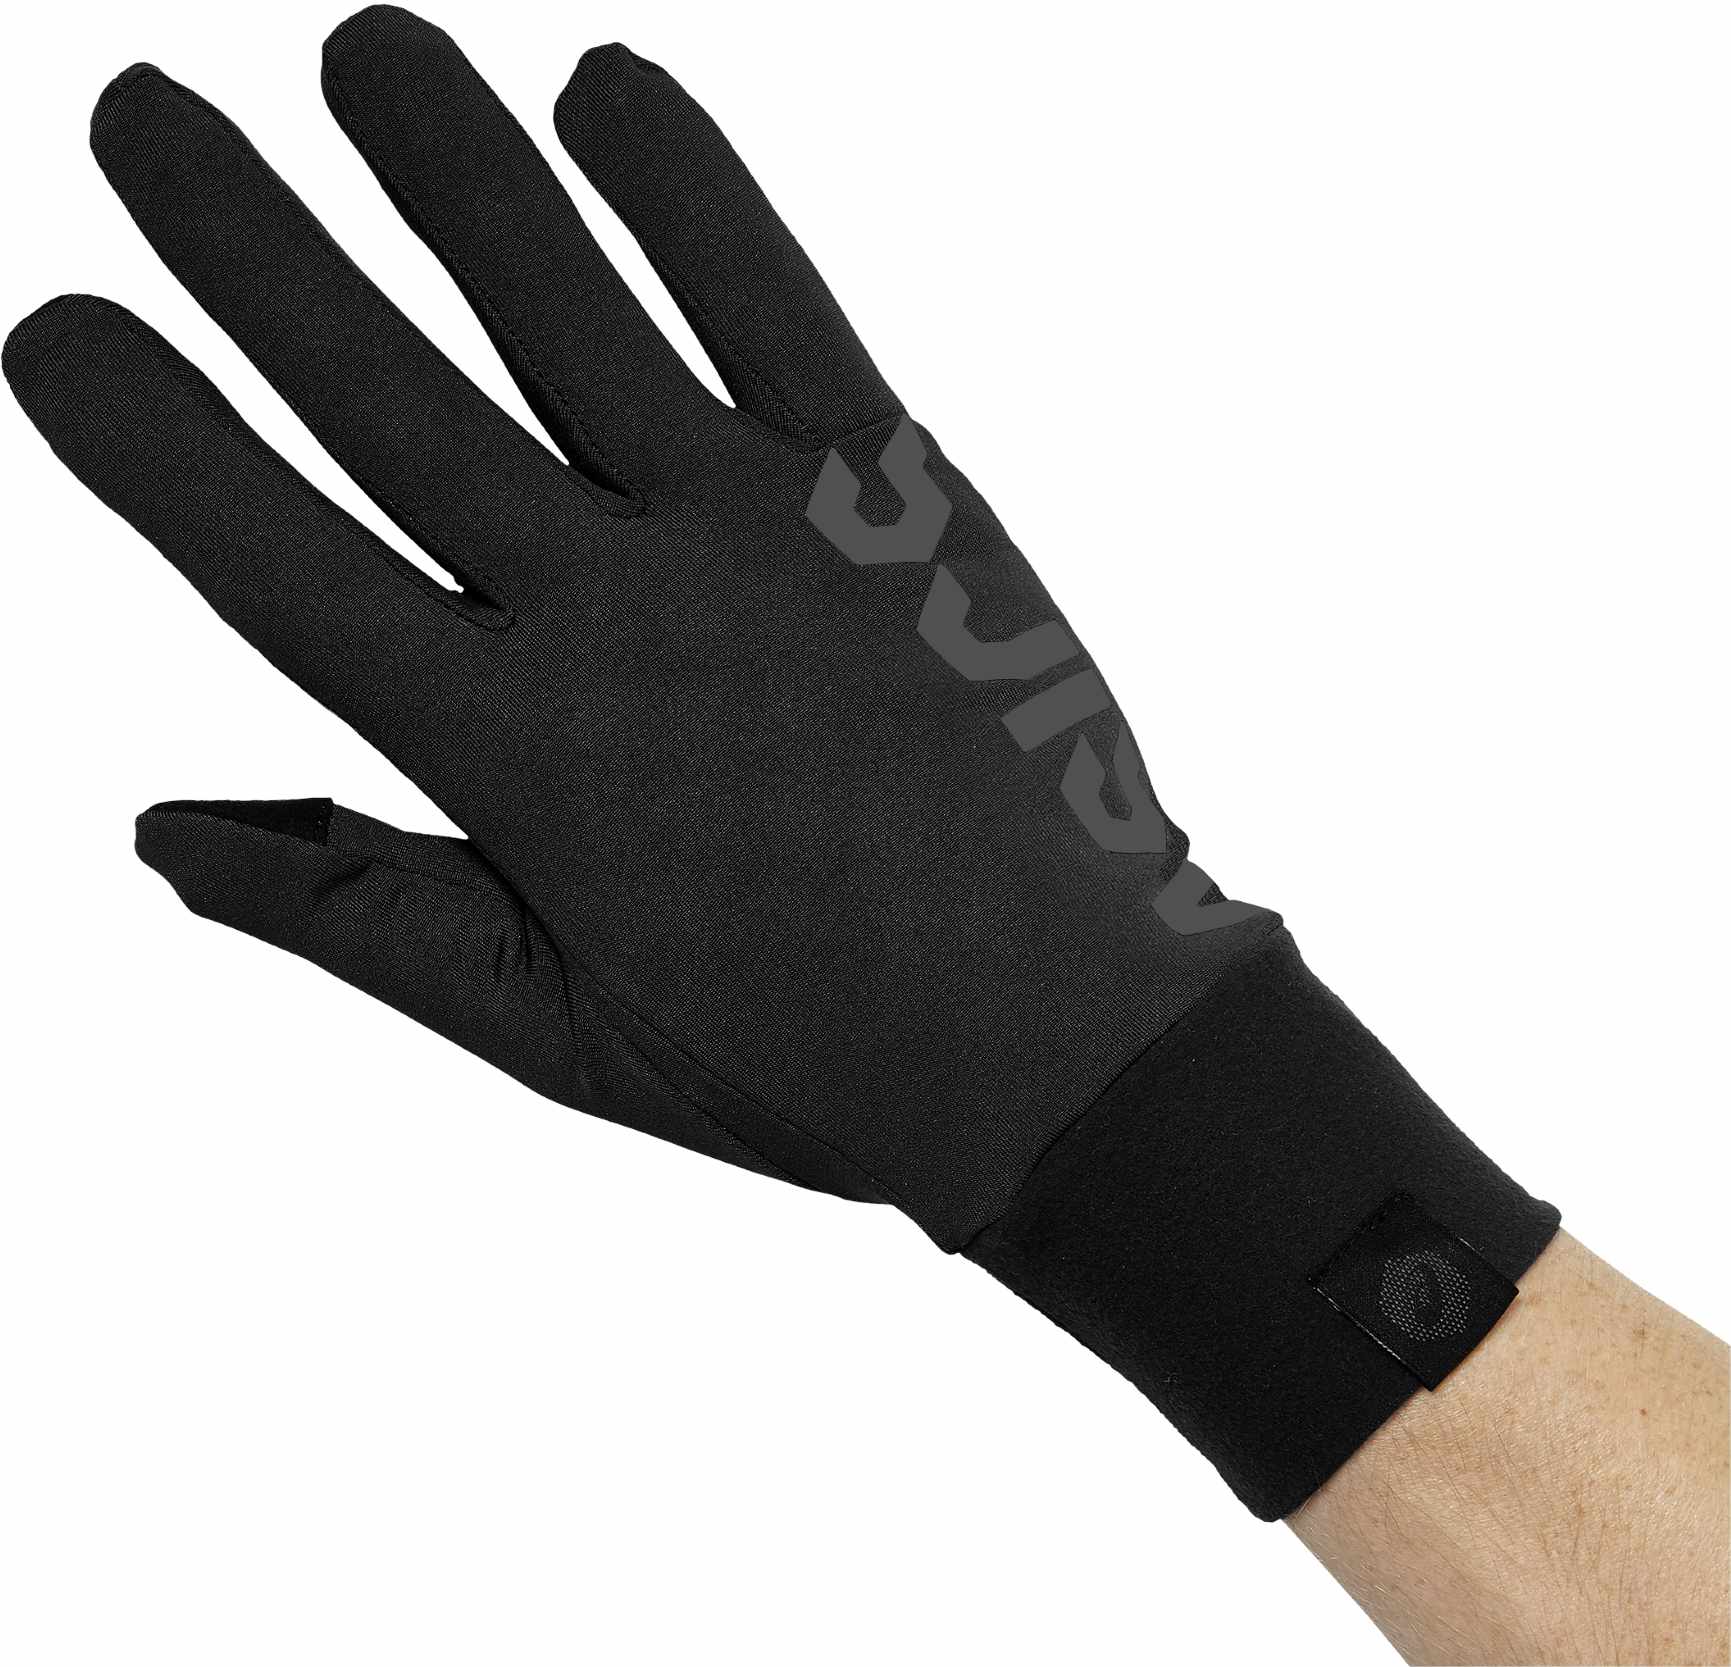 Unisex running gloves